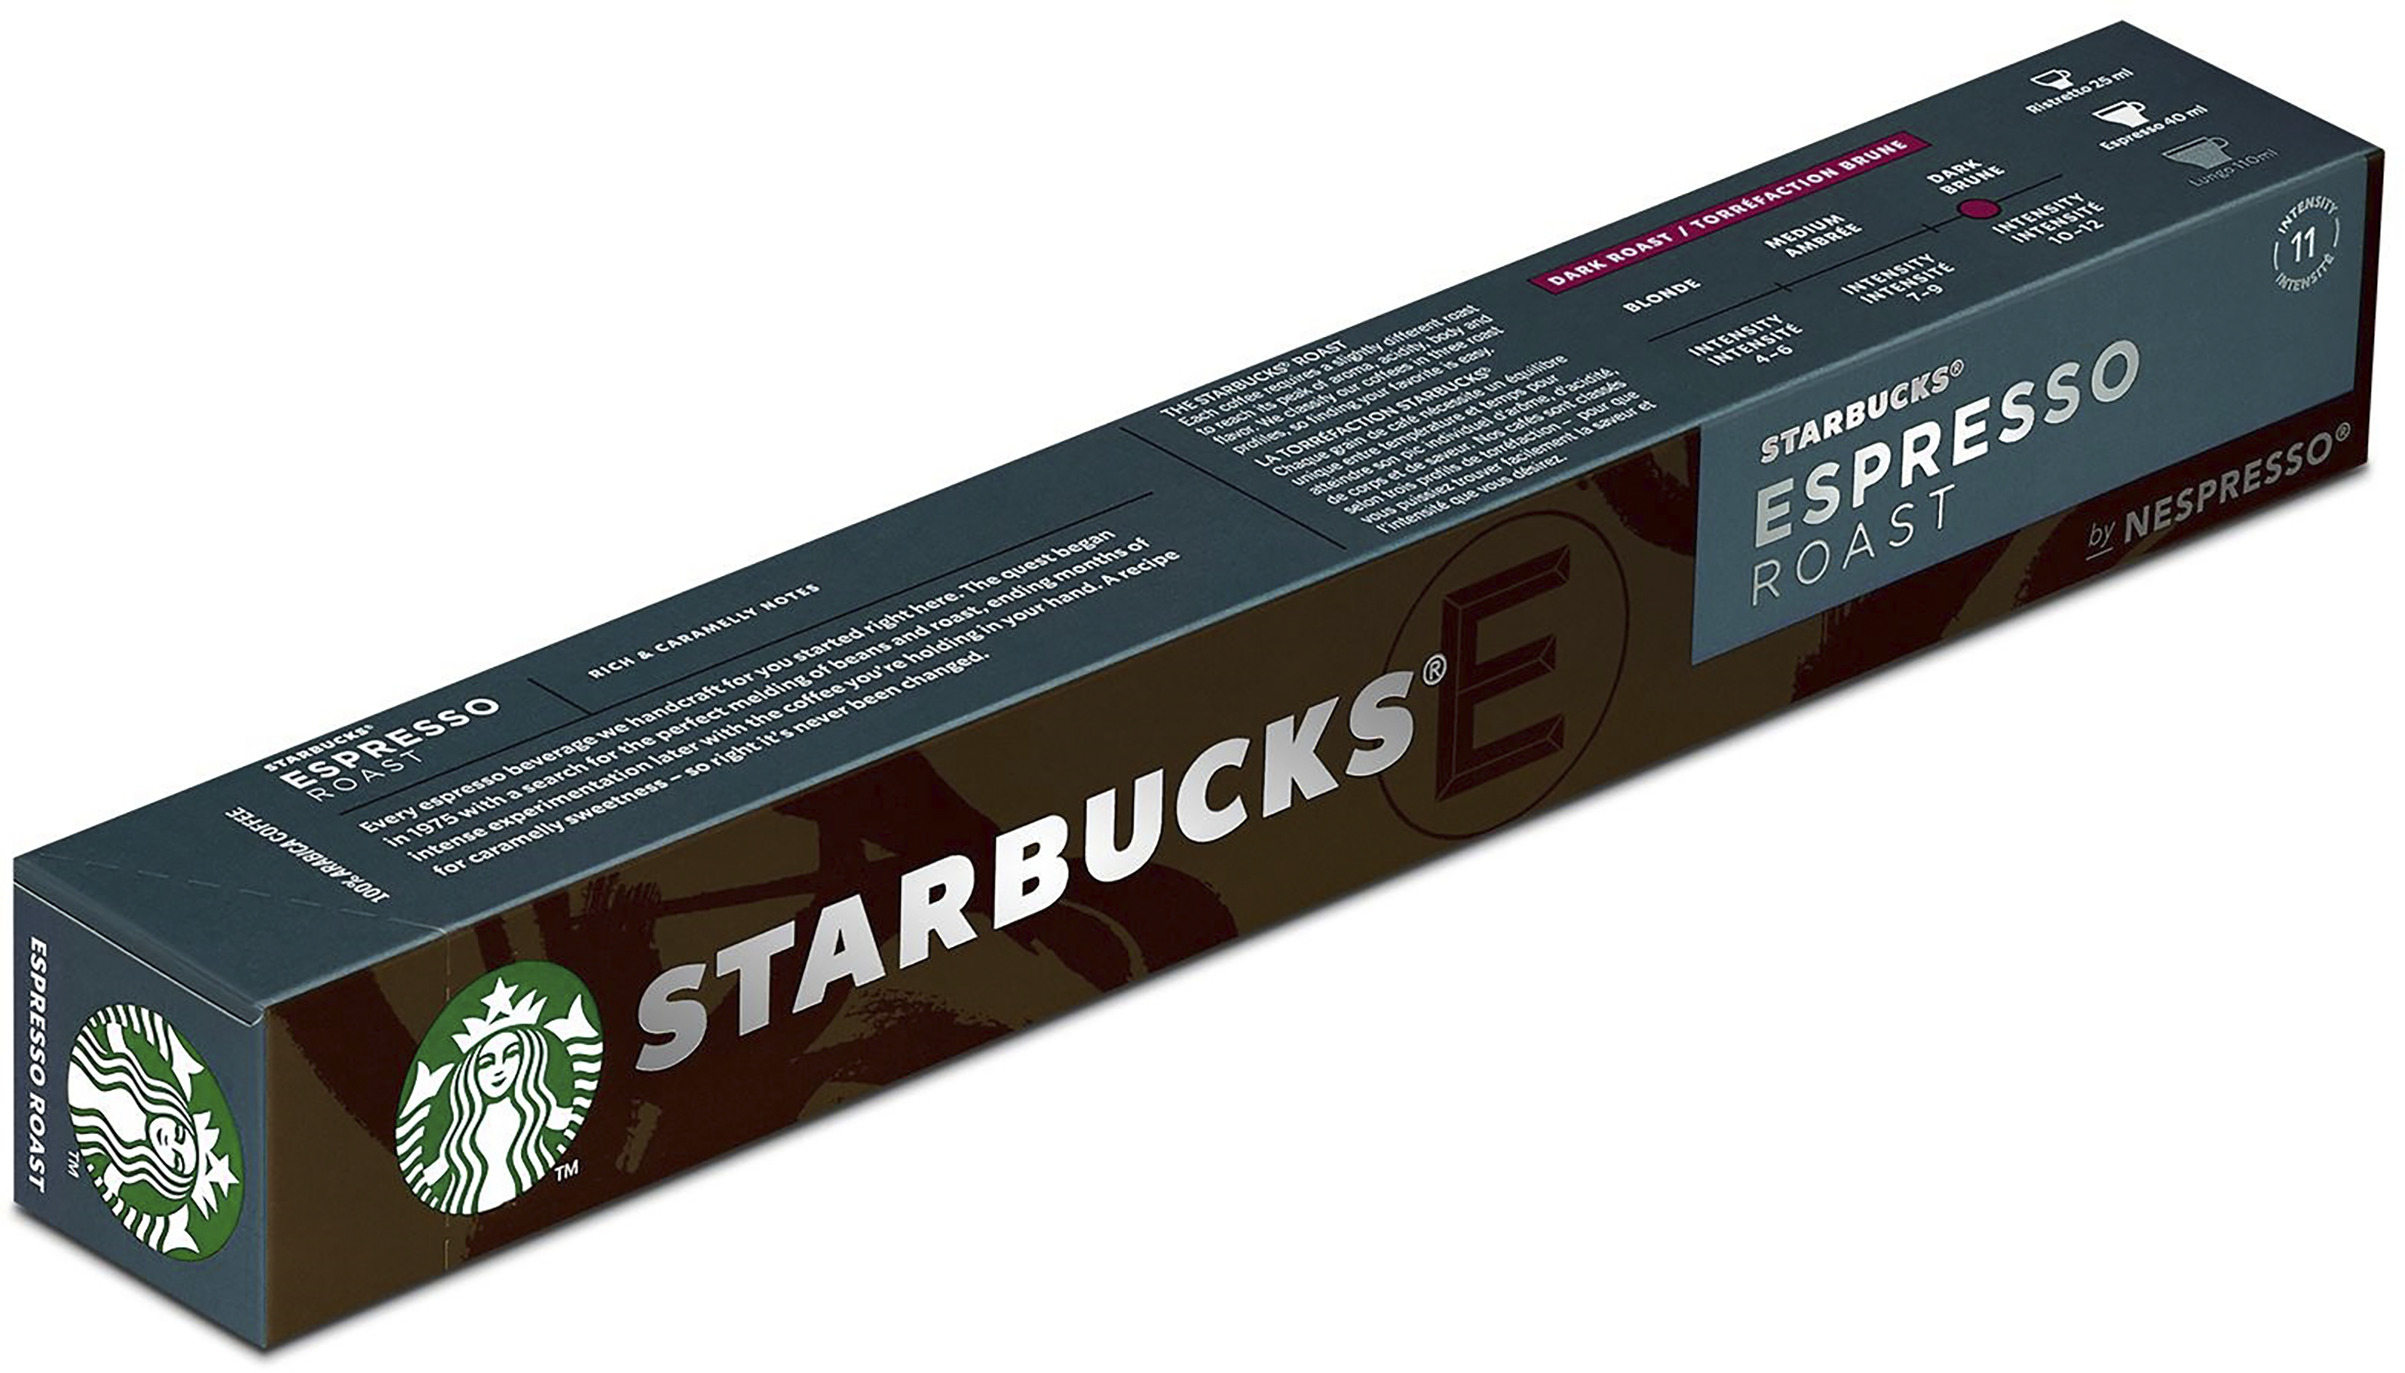 STARBUCKS Starbucks by Nespresso Espresso Roast 10 st